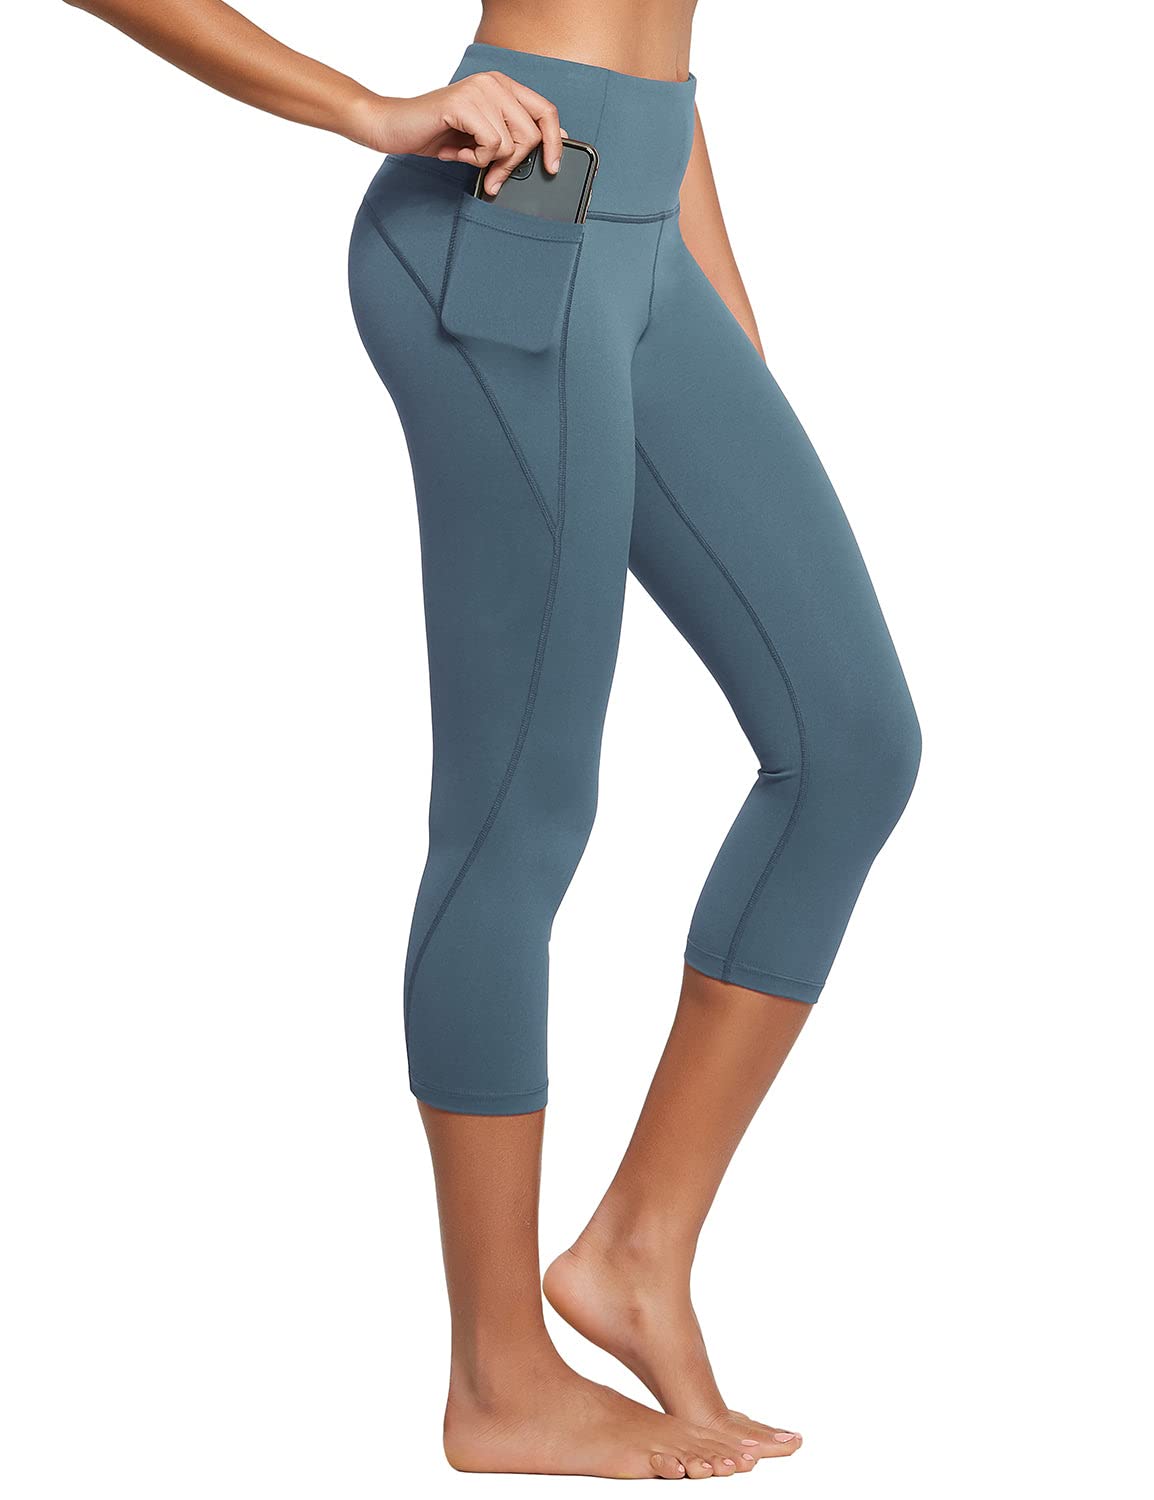 Buy BALEAF Yoga Pants for Women Capris High Waist Leggings with